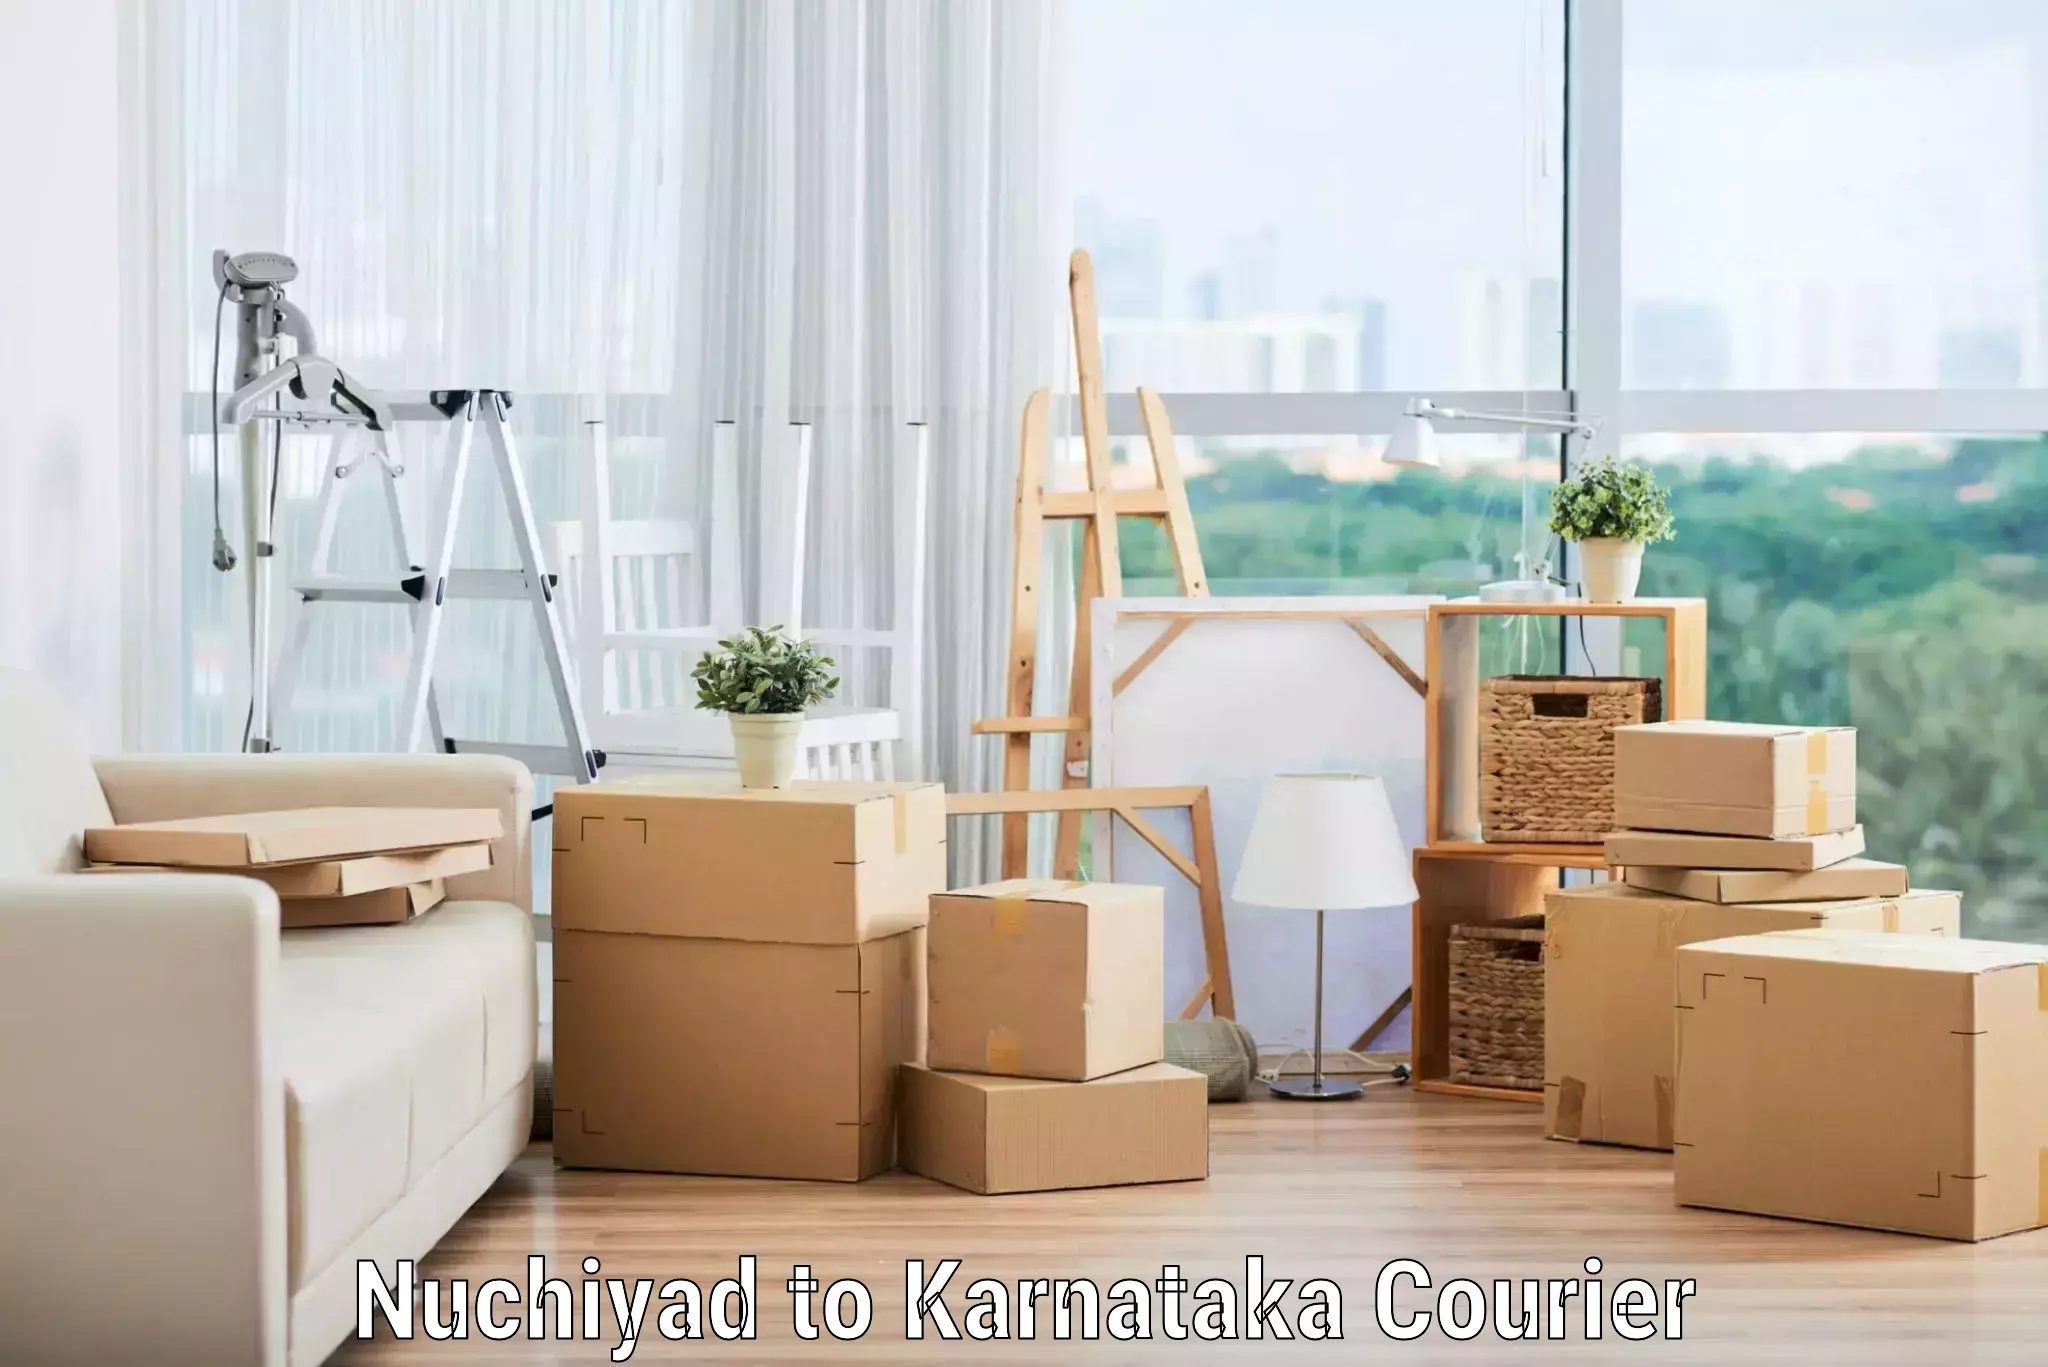 Professional movers and packers Nuchiyad to Kulshekar